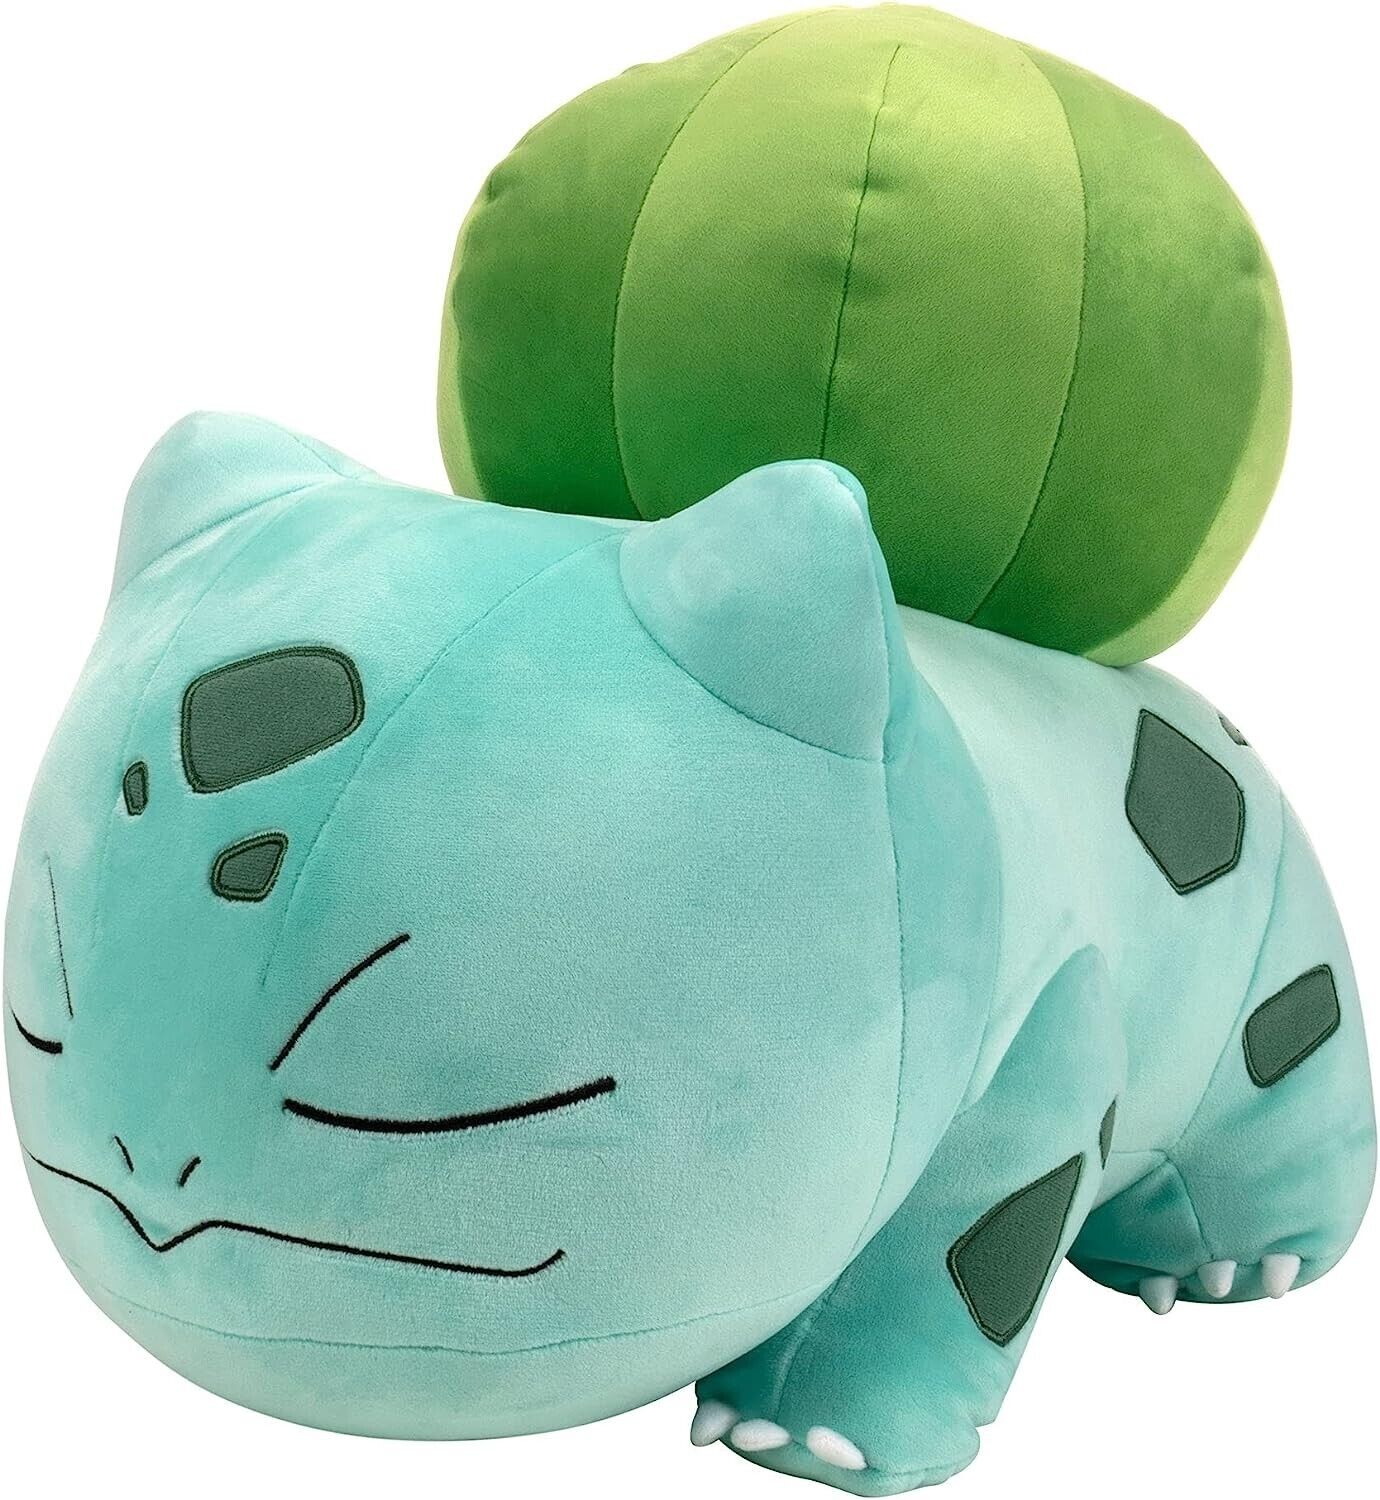 Pokémon 18” Plush Sleeping Bulbasaur - Cuddly Must Have Fans- Plush for